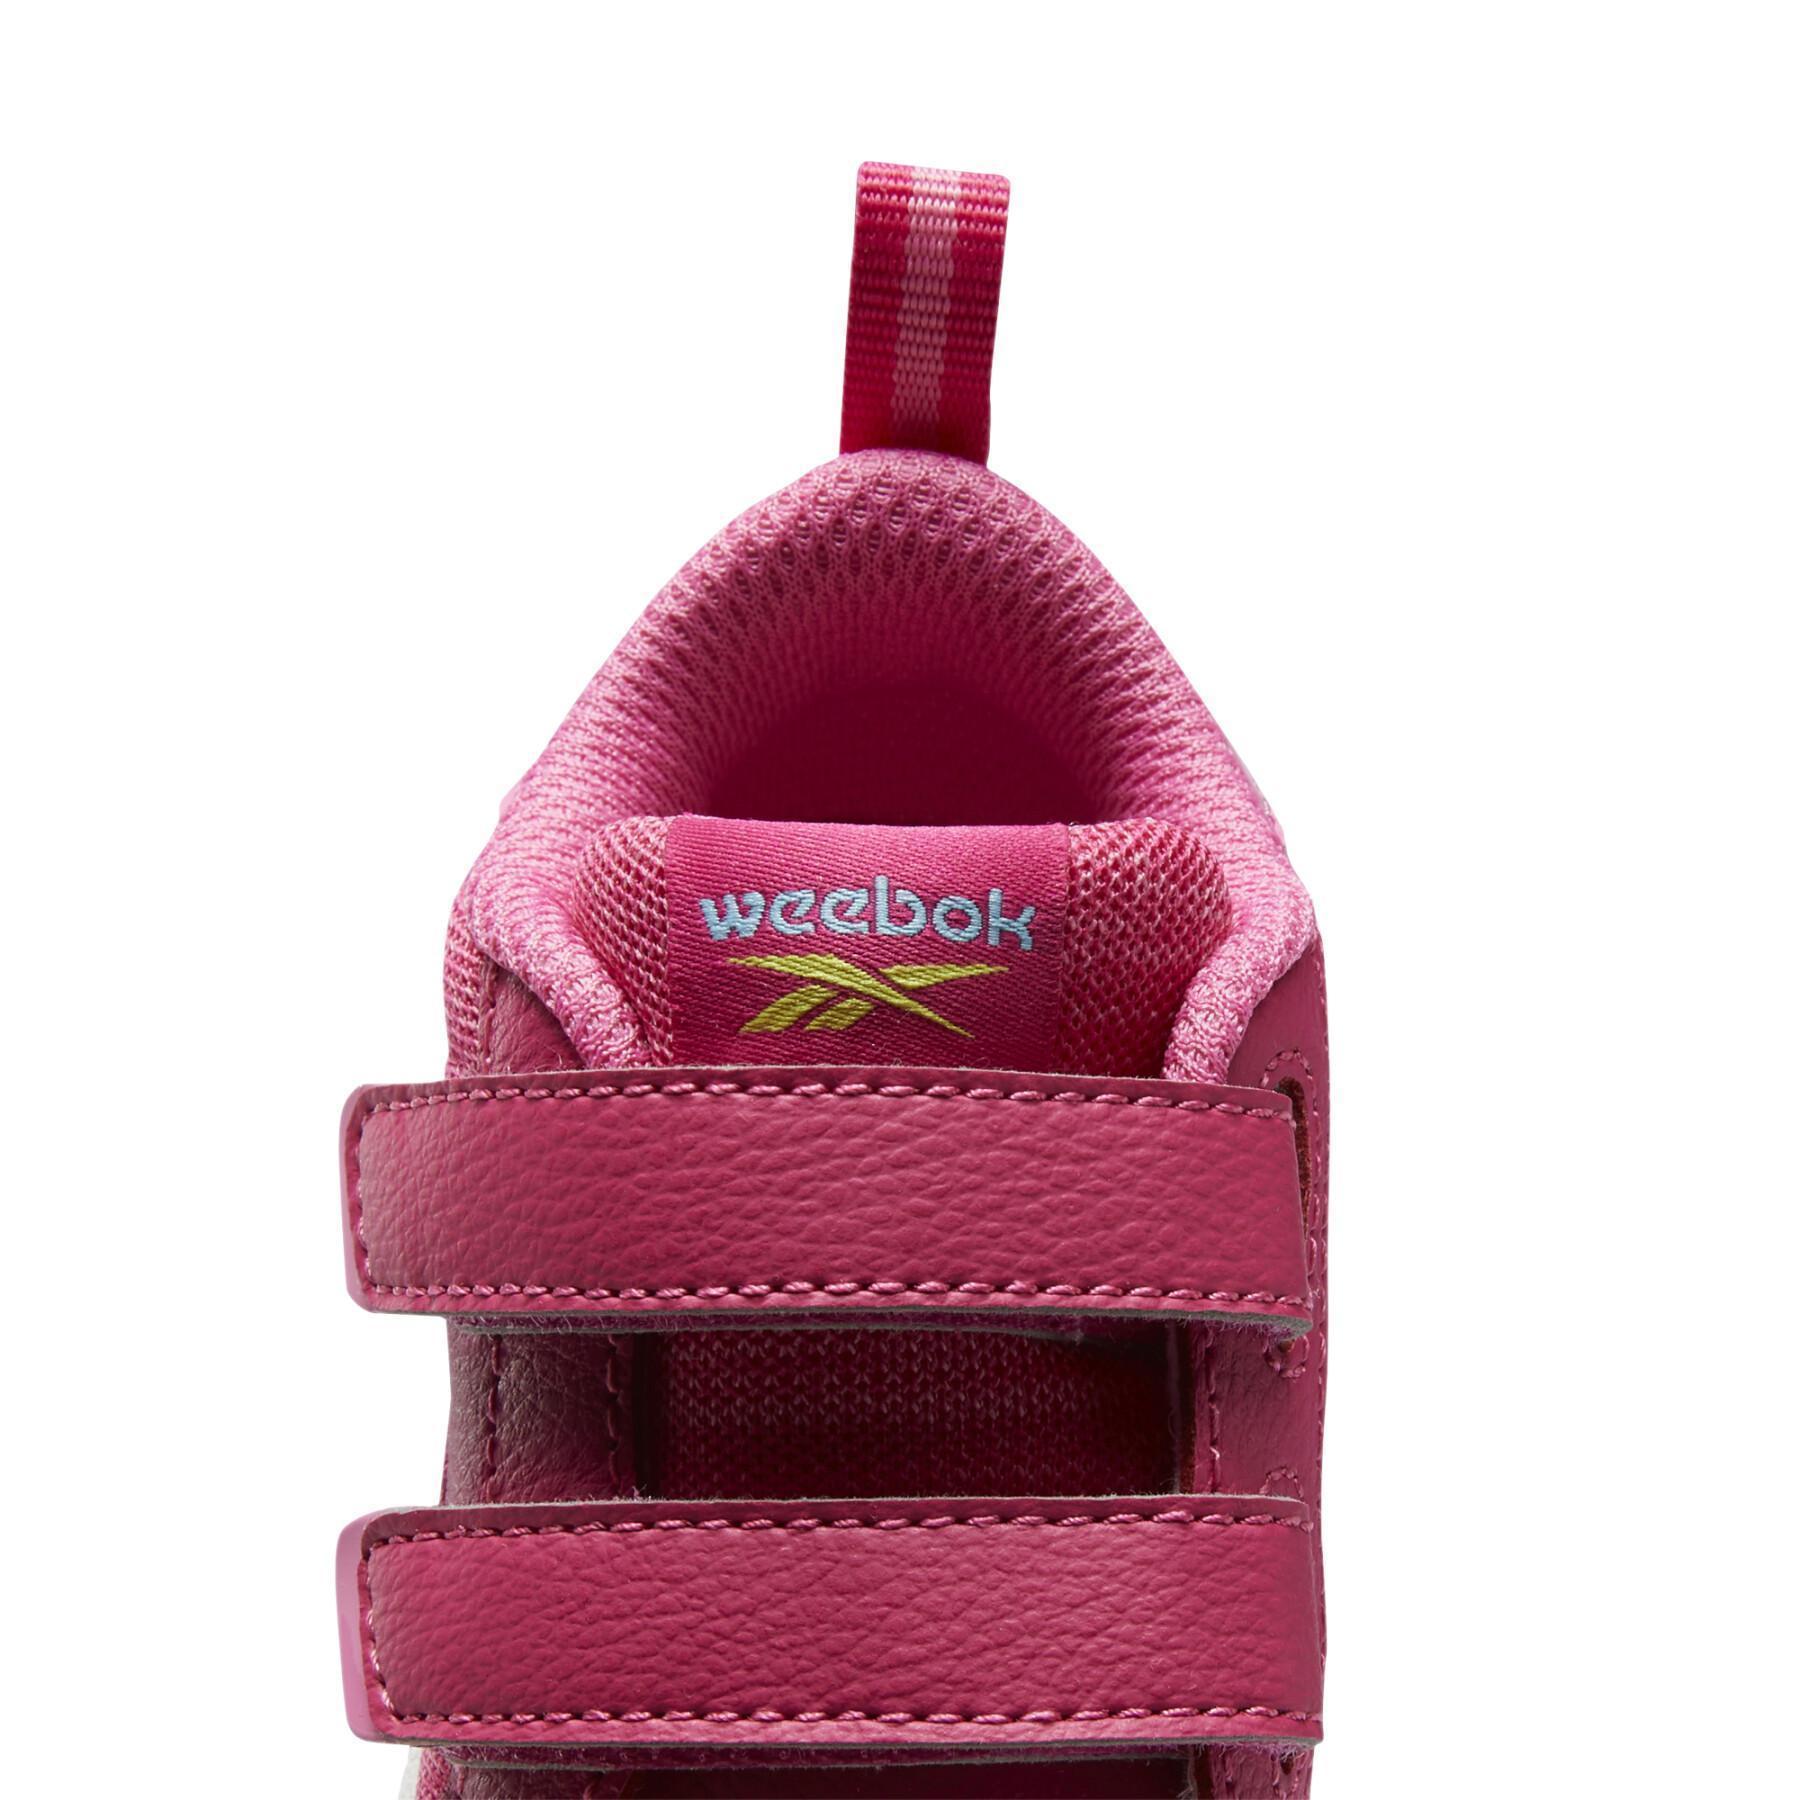 Chaussures bébé Reebok Weebok Clasp Low